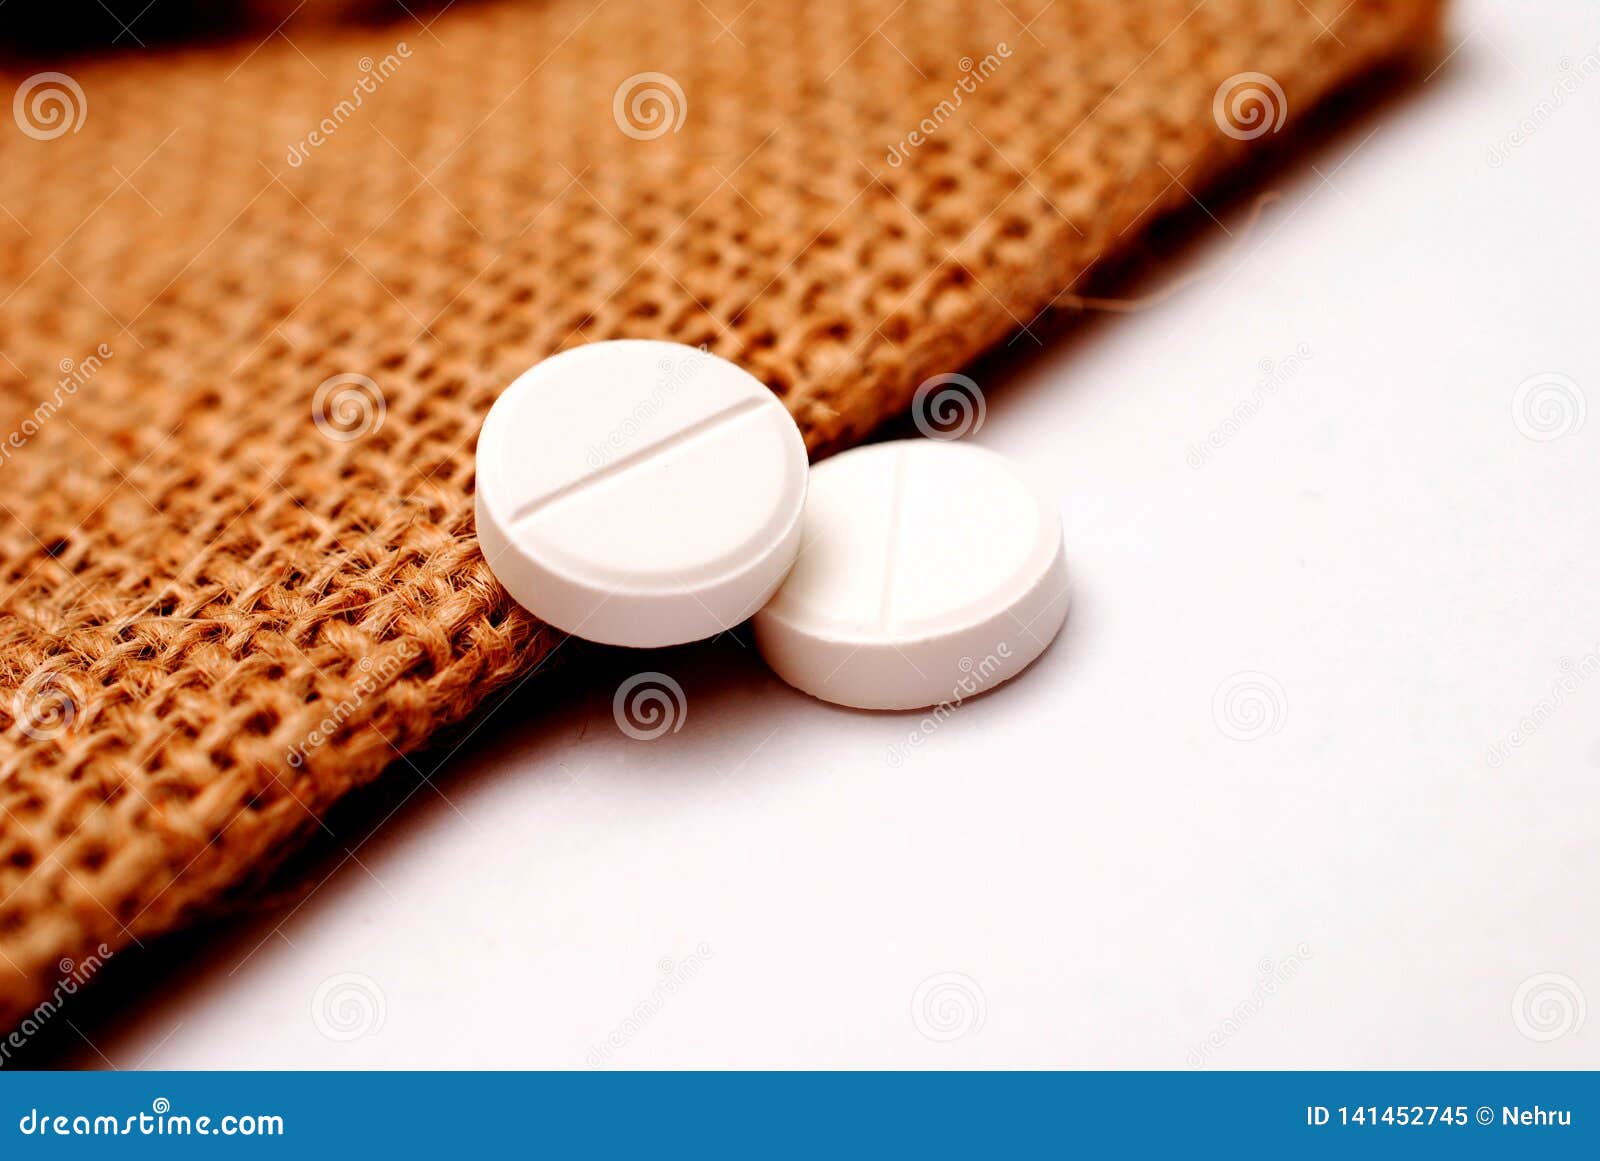 White Painkiller Pills On A Small Jute Bag Background Stock Image